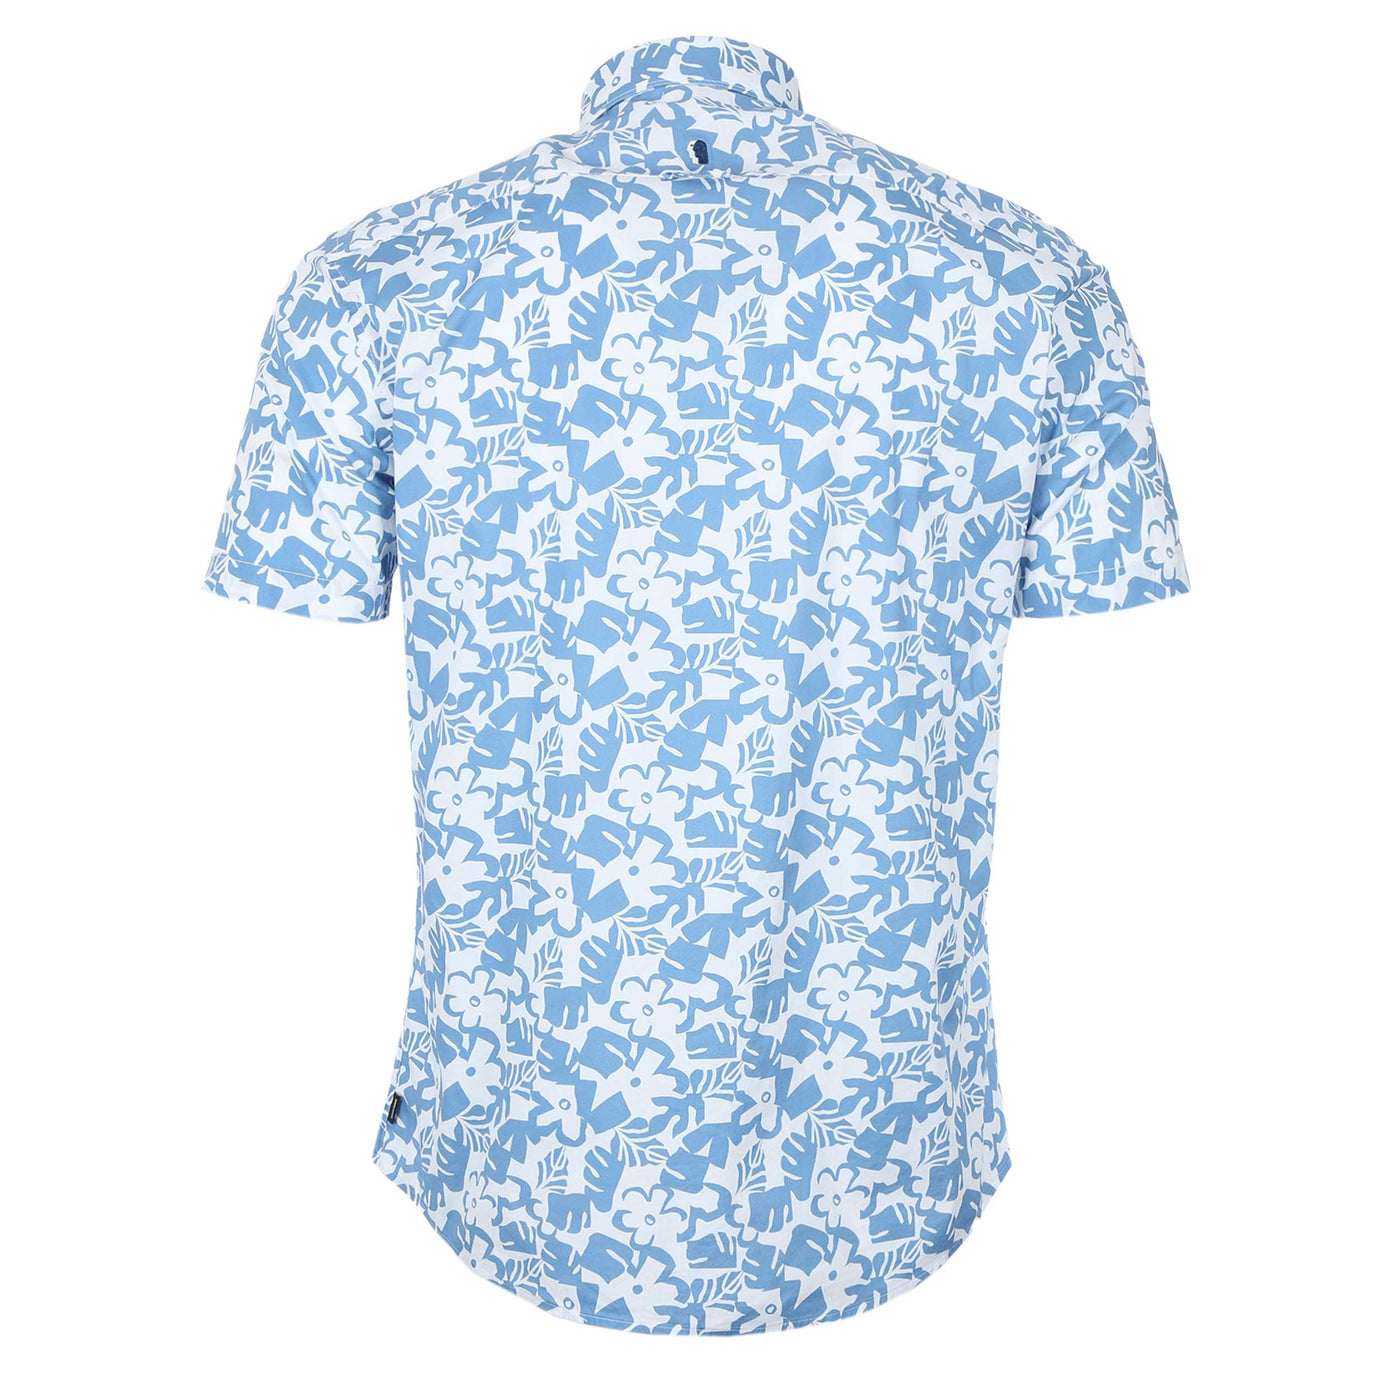 Remus Uomo Leaf Floral Print Short Sleeve Shirt in Blue White Back